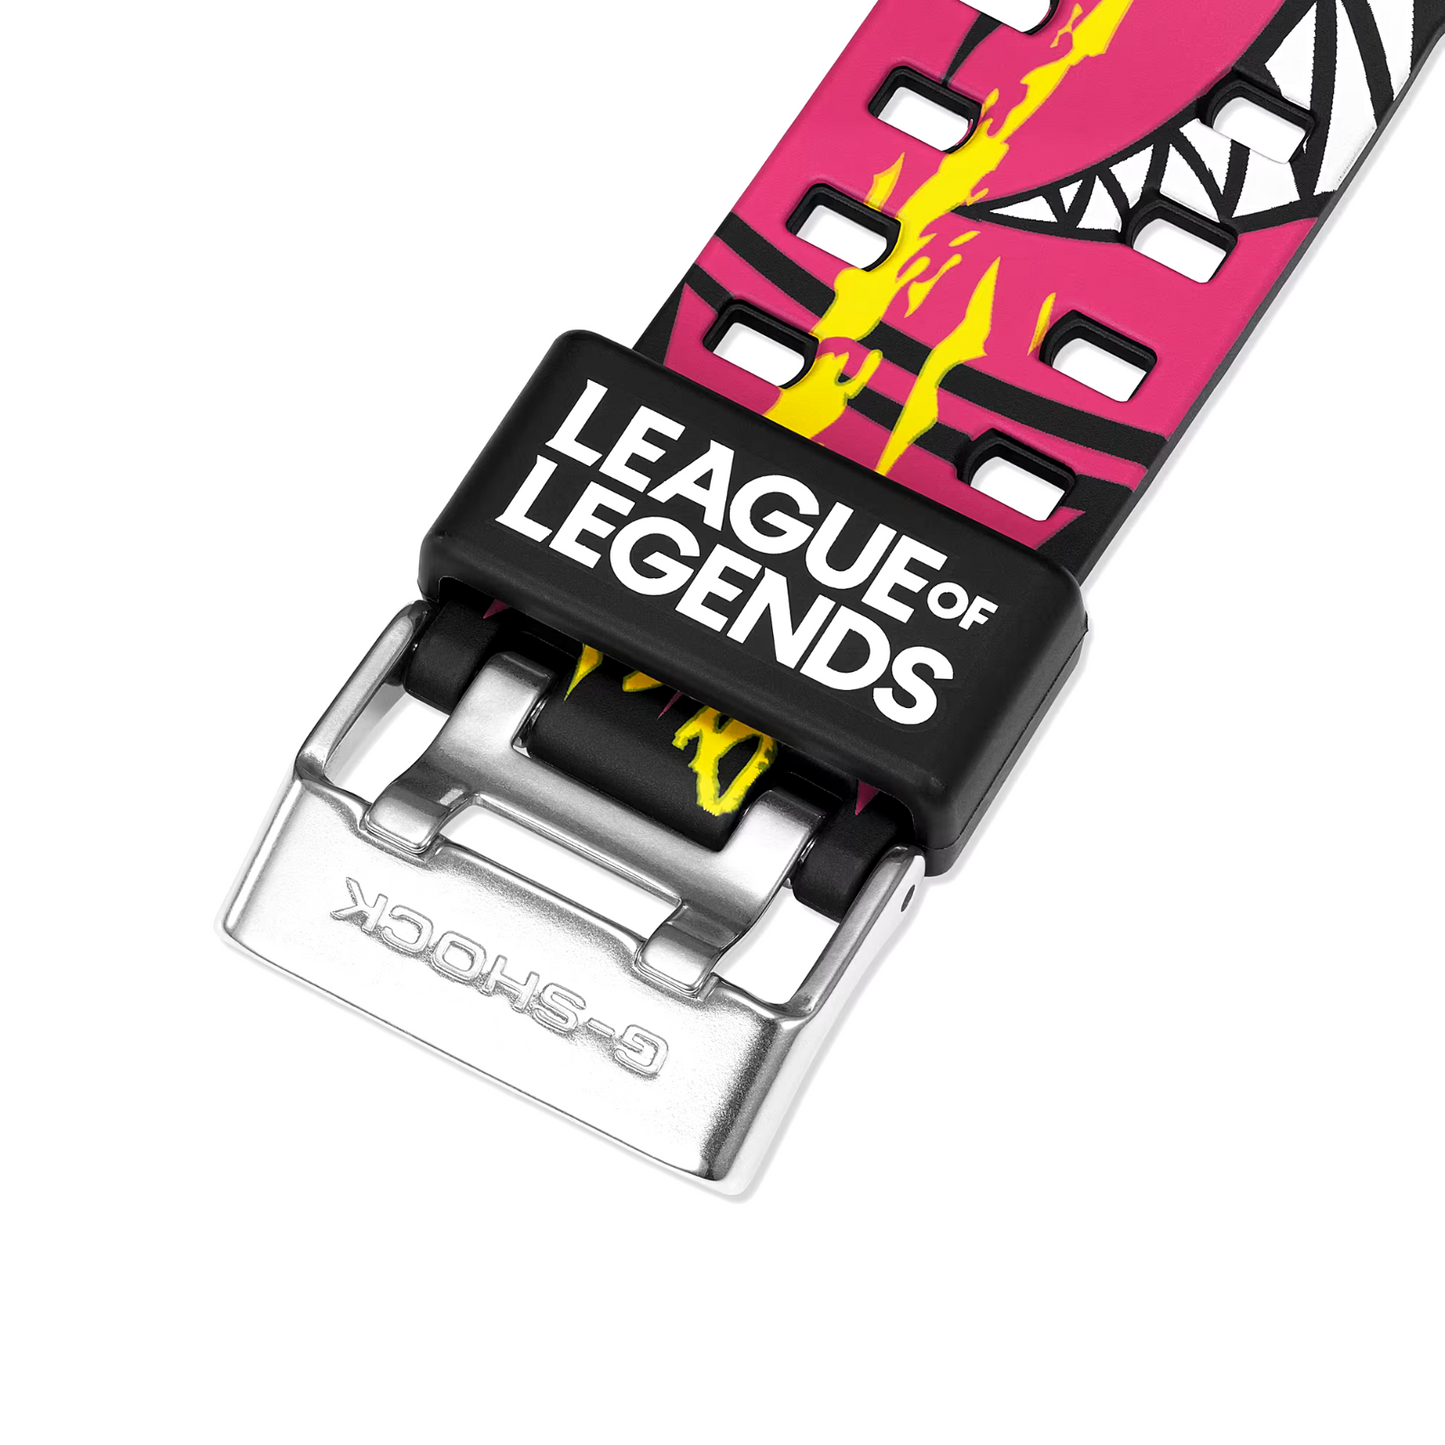 Casio G-Shock League Of Legends JINX Analog Resin Watch - GA-110LL-1